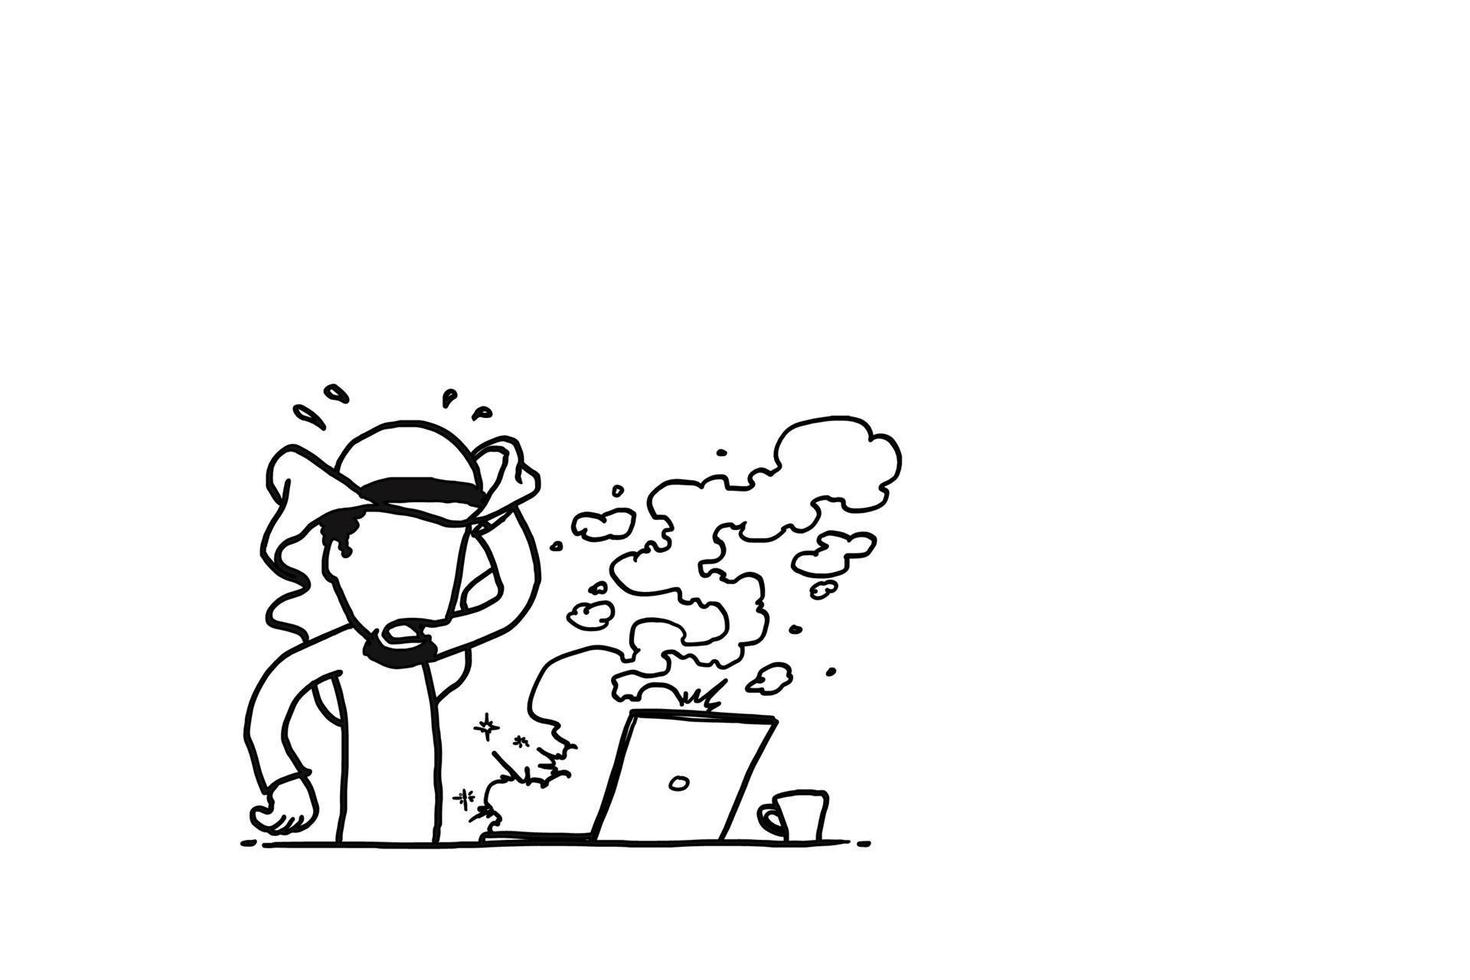 Arab businessman shocked his laptop is explode. Hand drawn vector illustration design